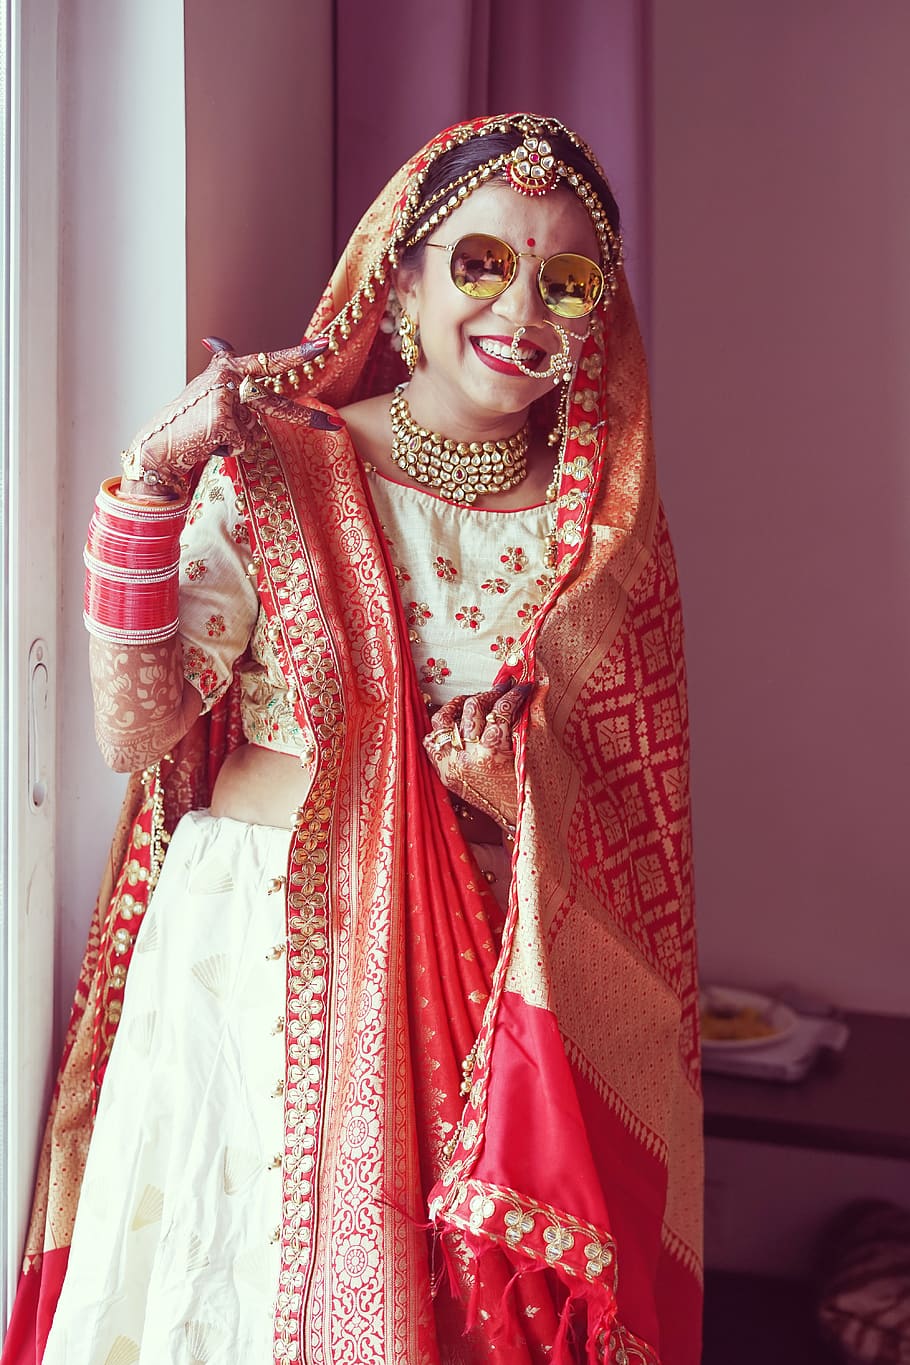 Indian bride 1080P, 2K, 4K, 5K HD wallpaper free download